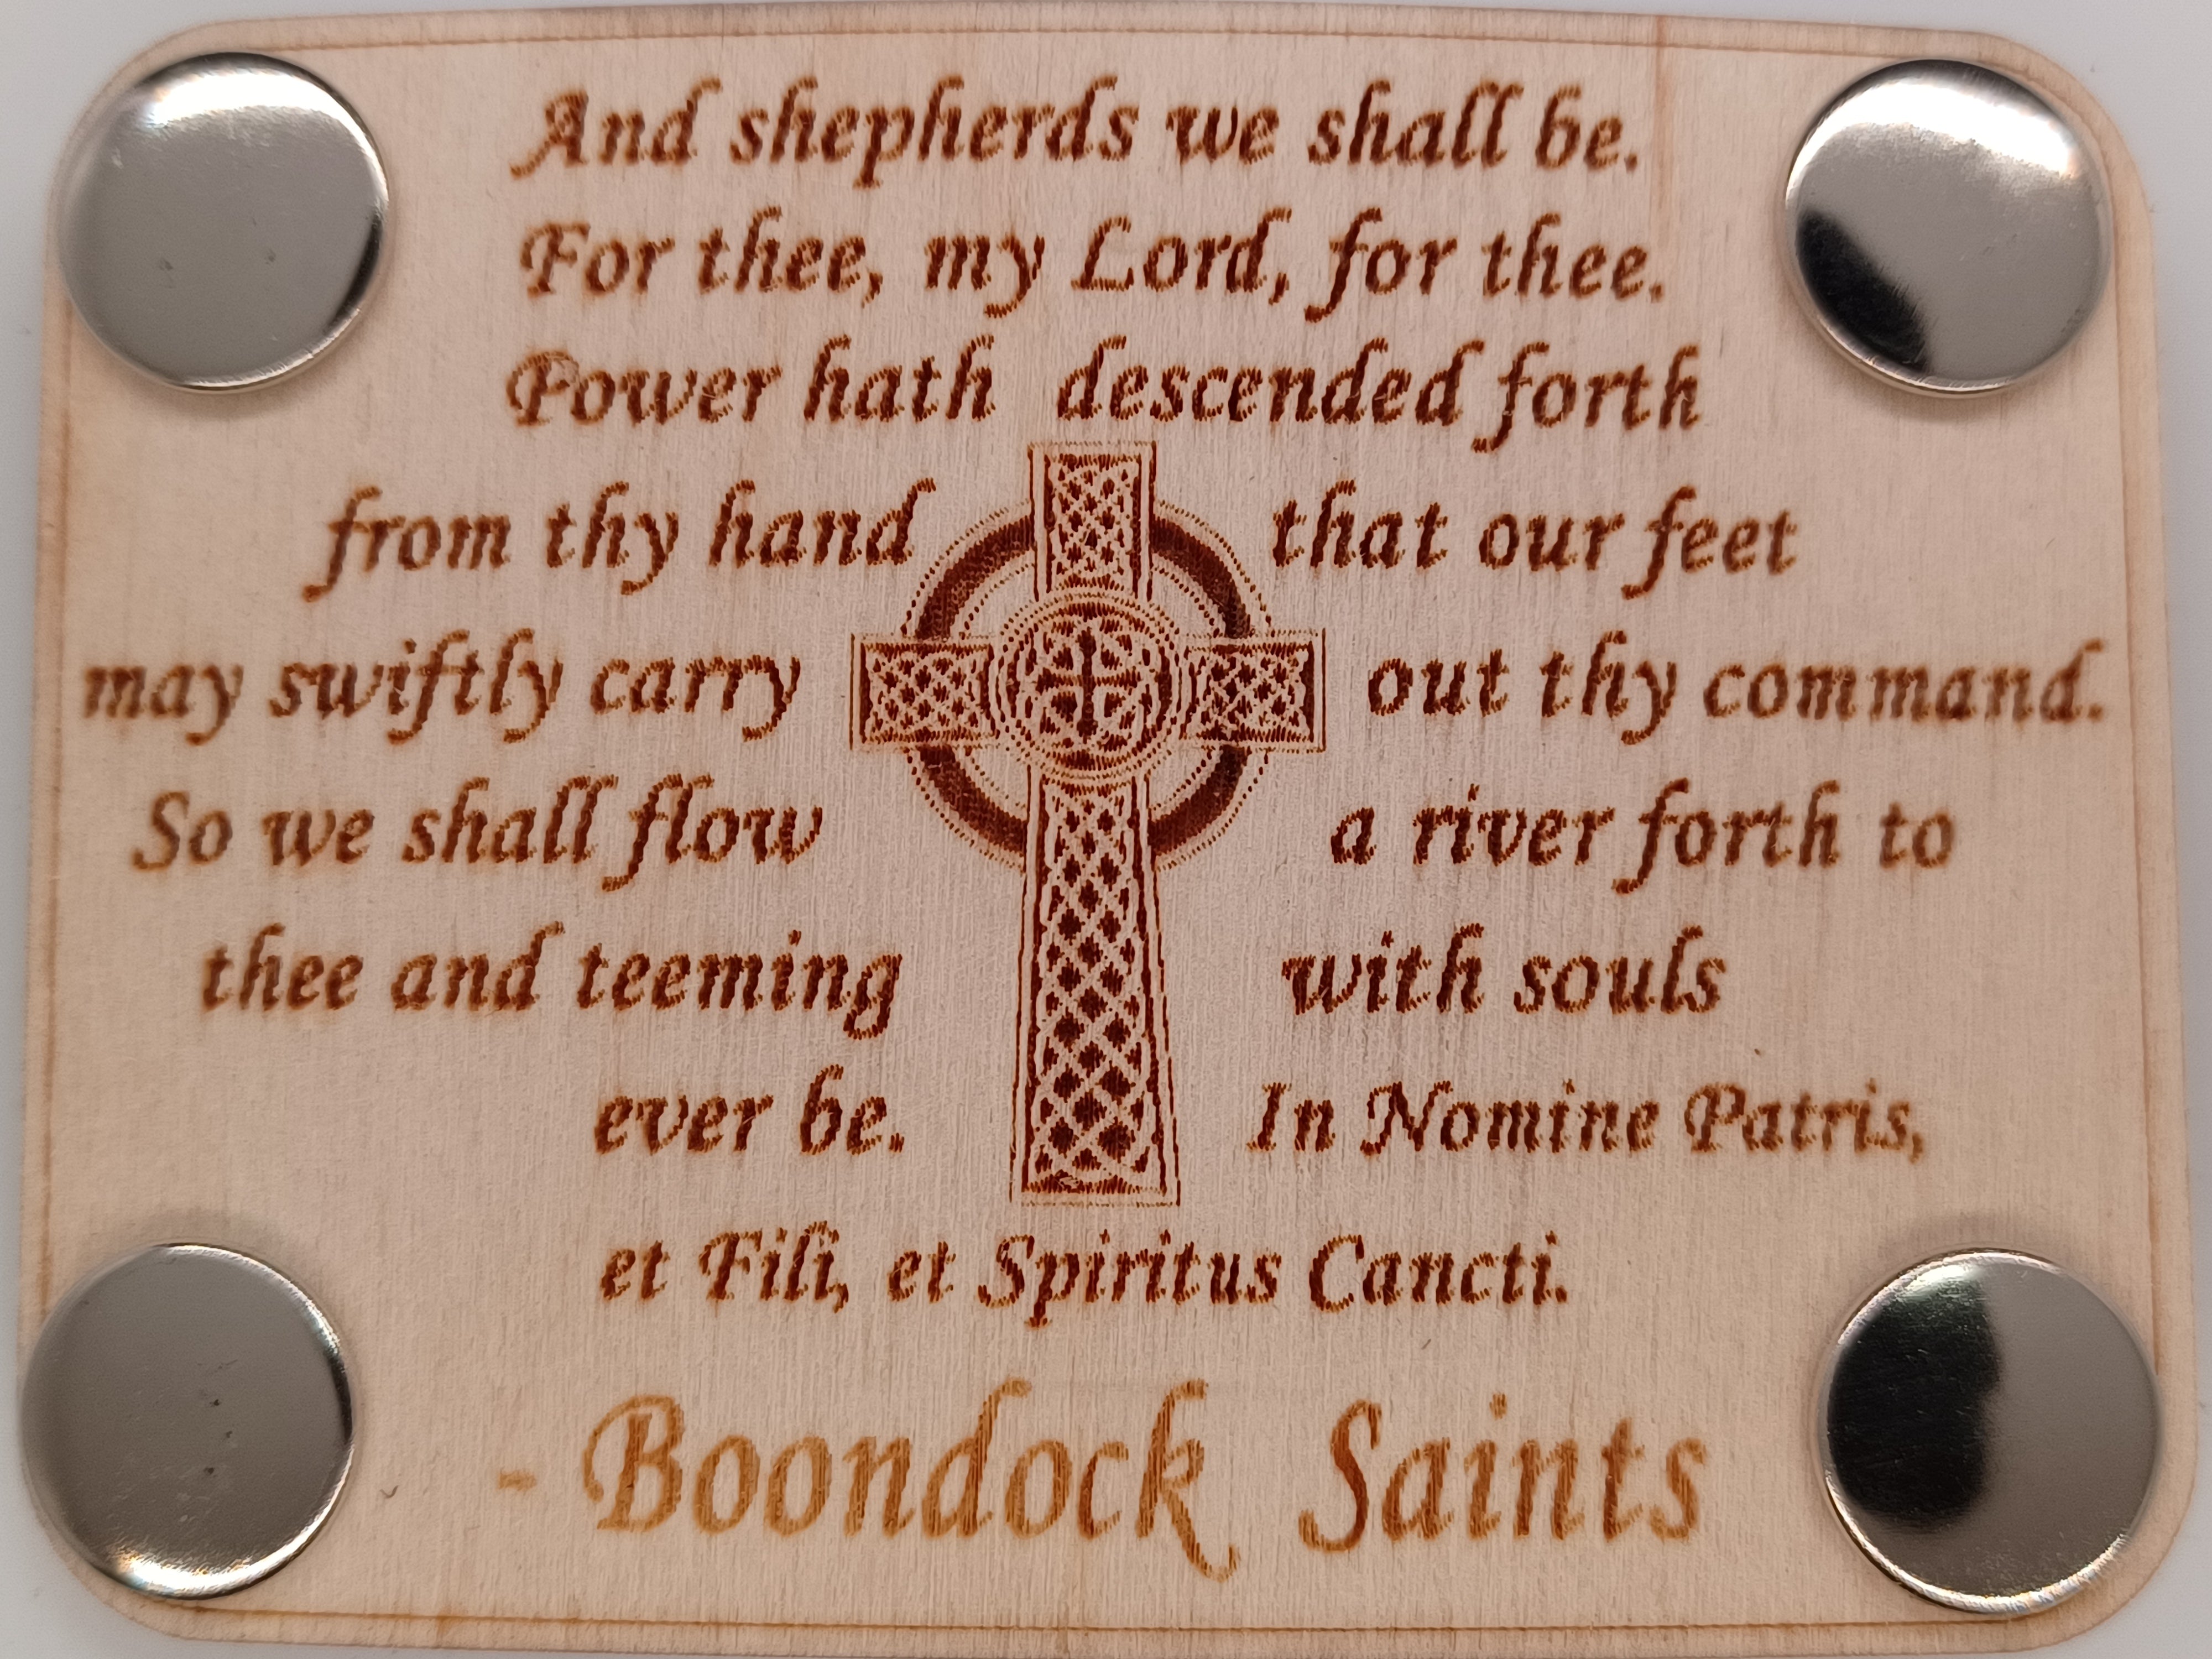 the boondock saints full prayer